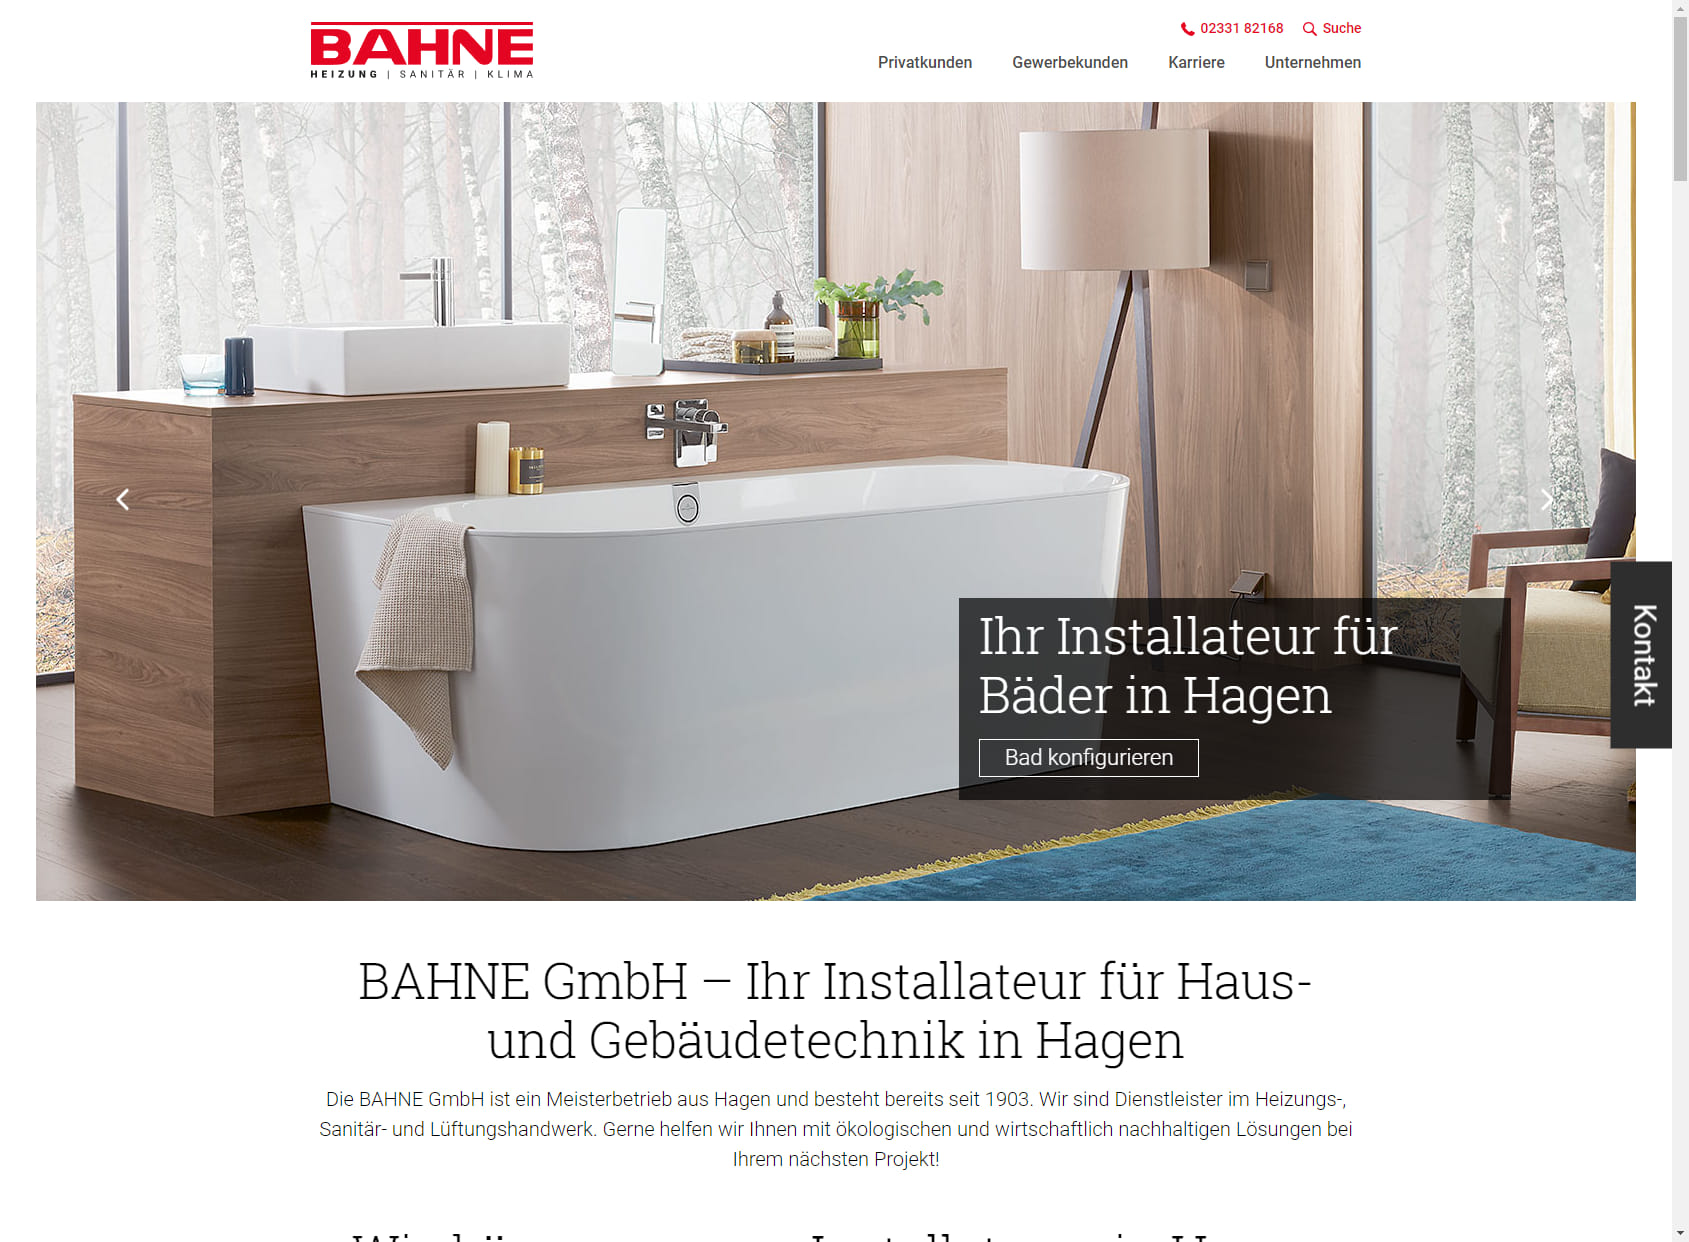 Bahne GmbH